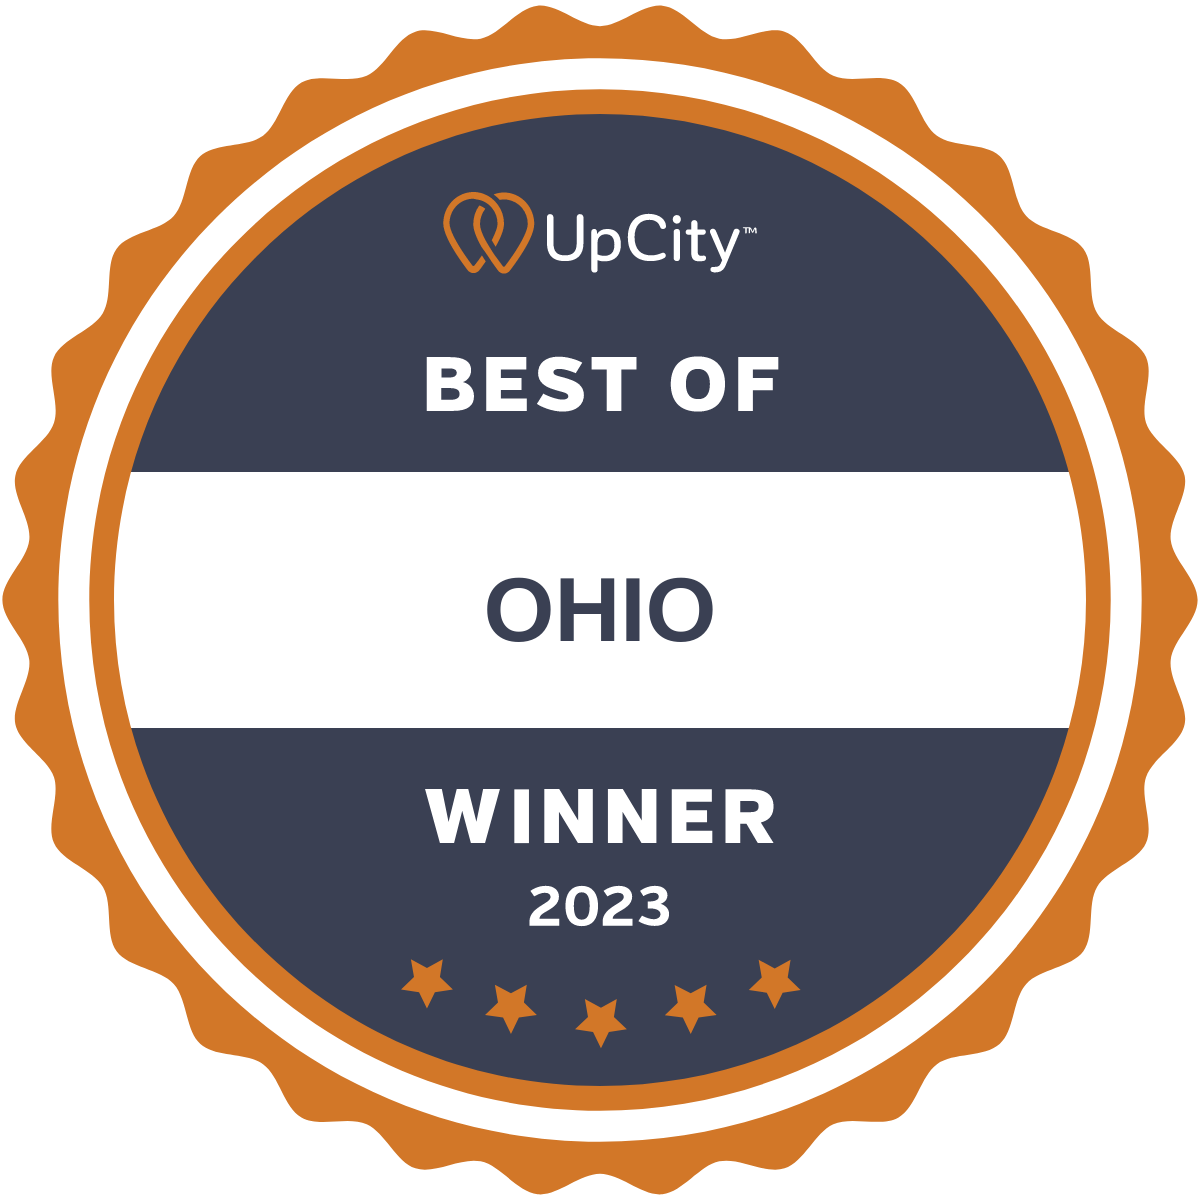 UpCity Best of Ohio Winner 2023